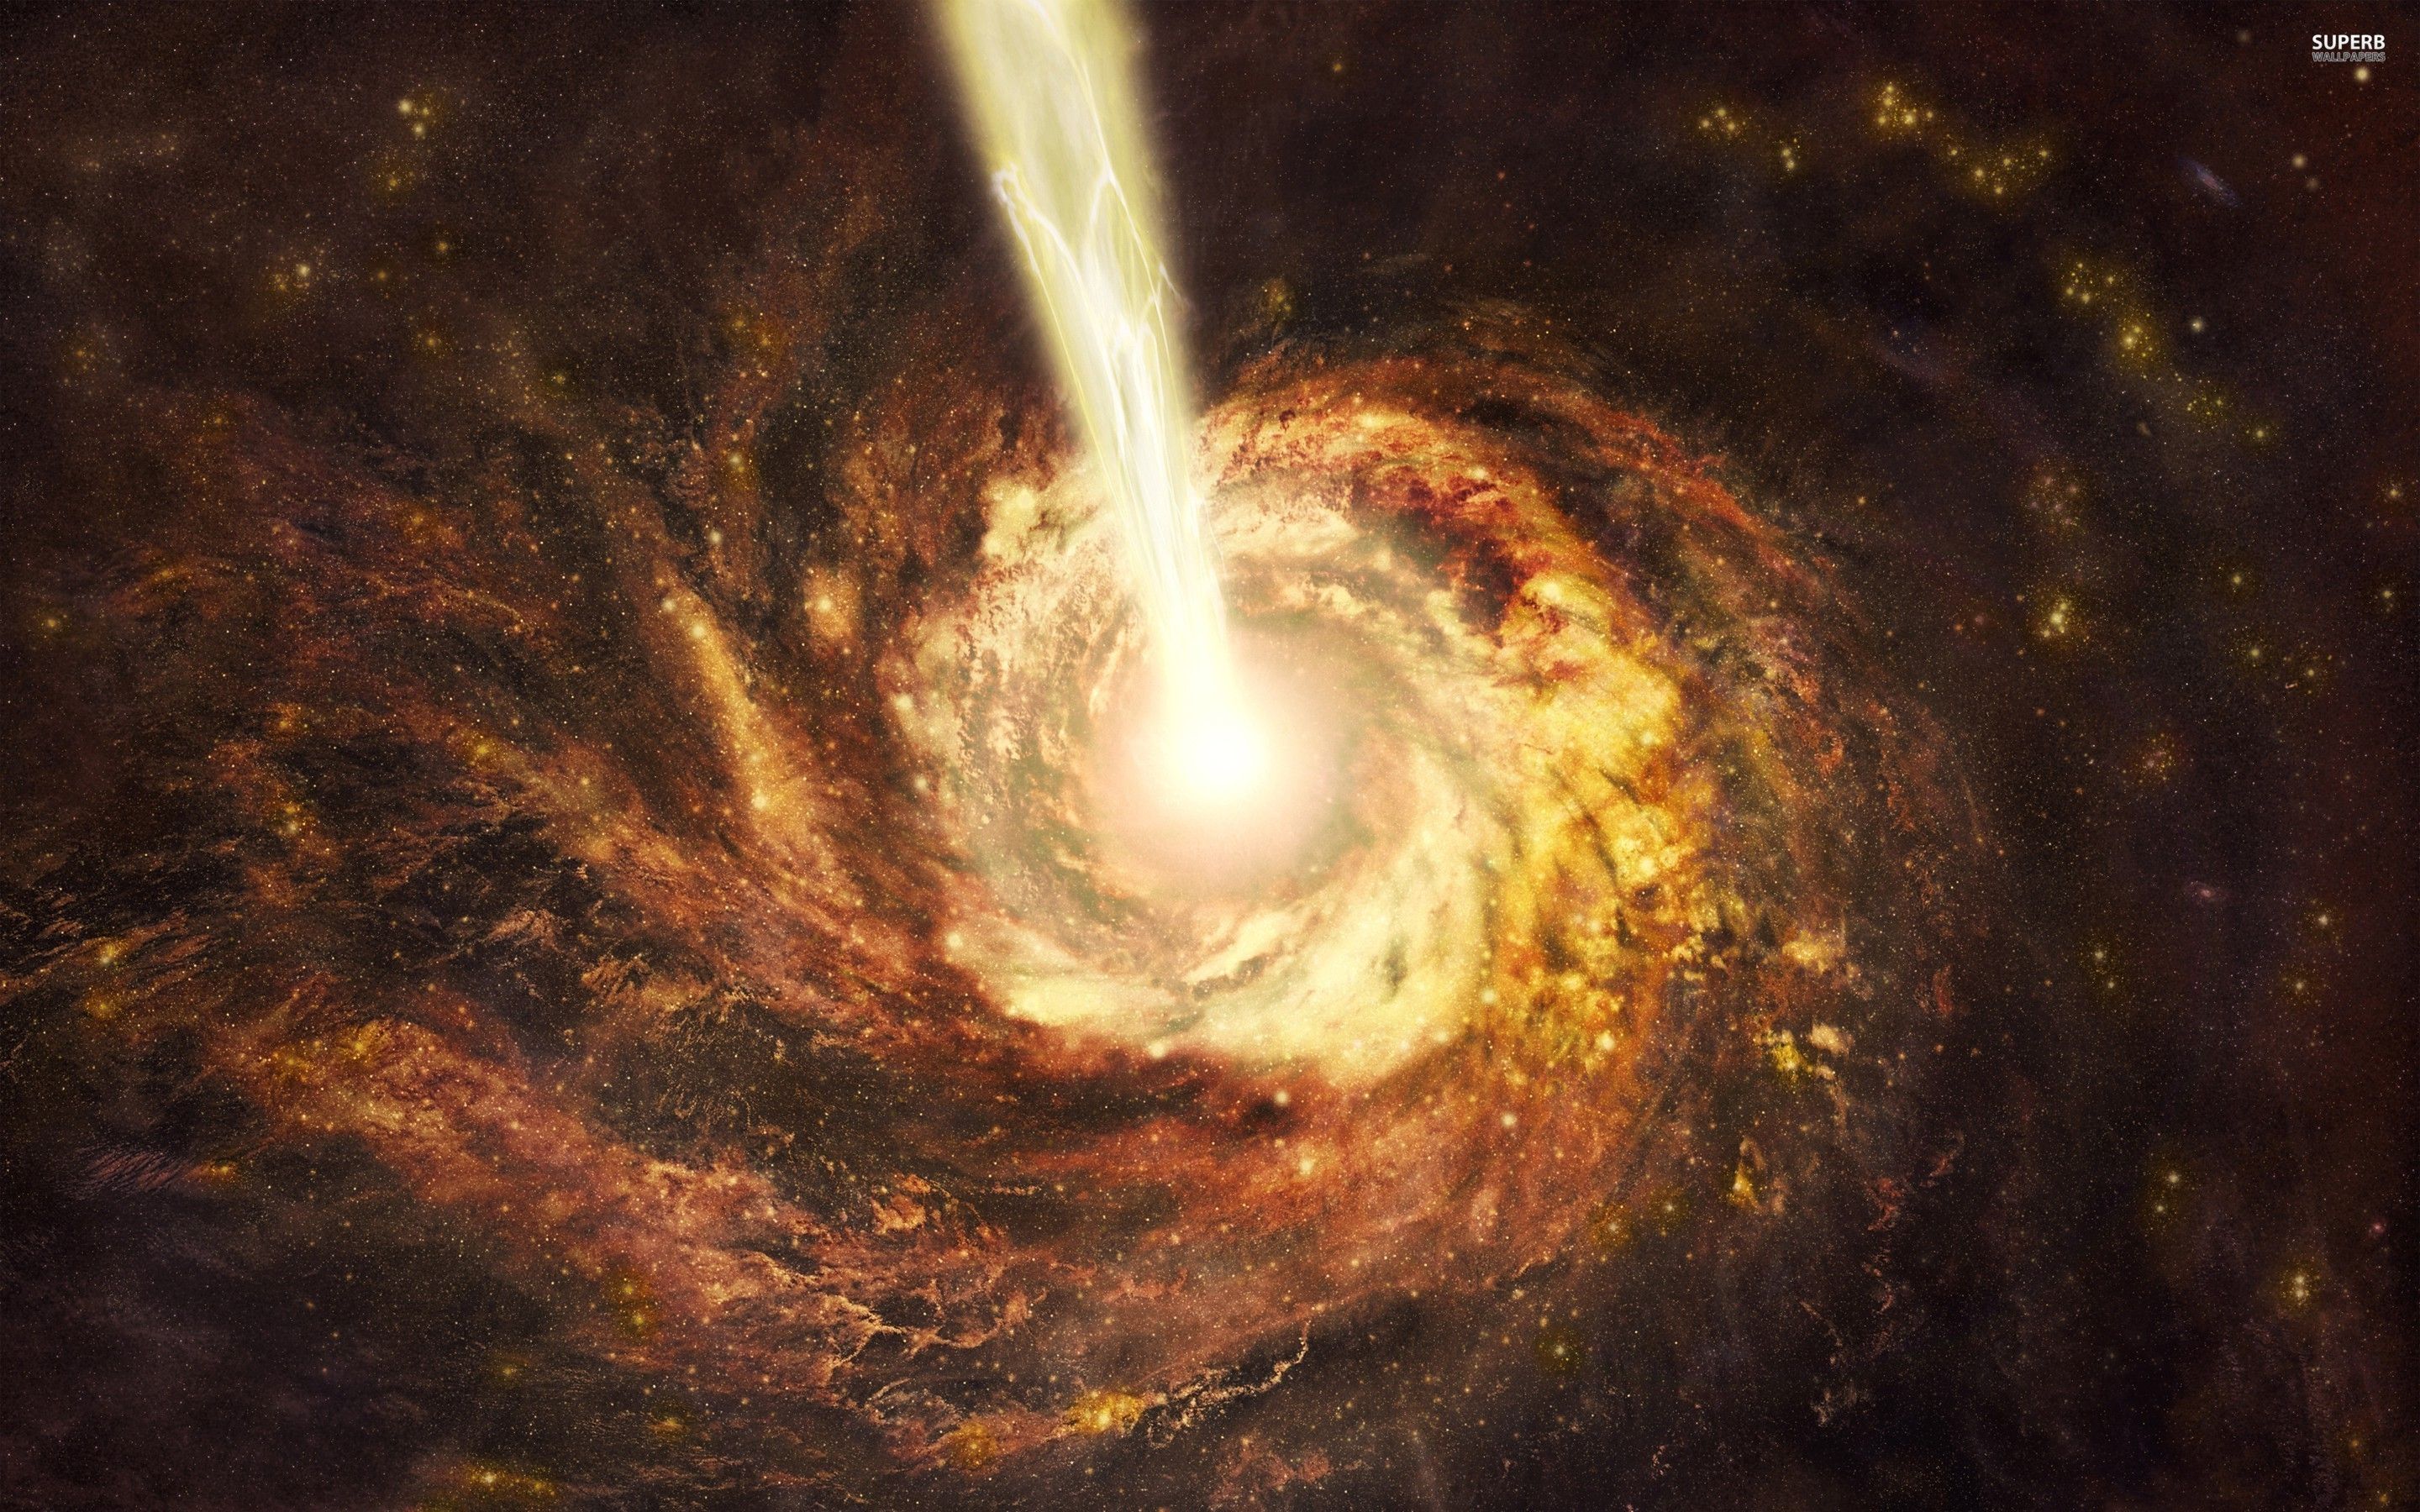 Black Hole Sun HD Wallpaper | Sky & Planets Wallpapers